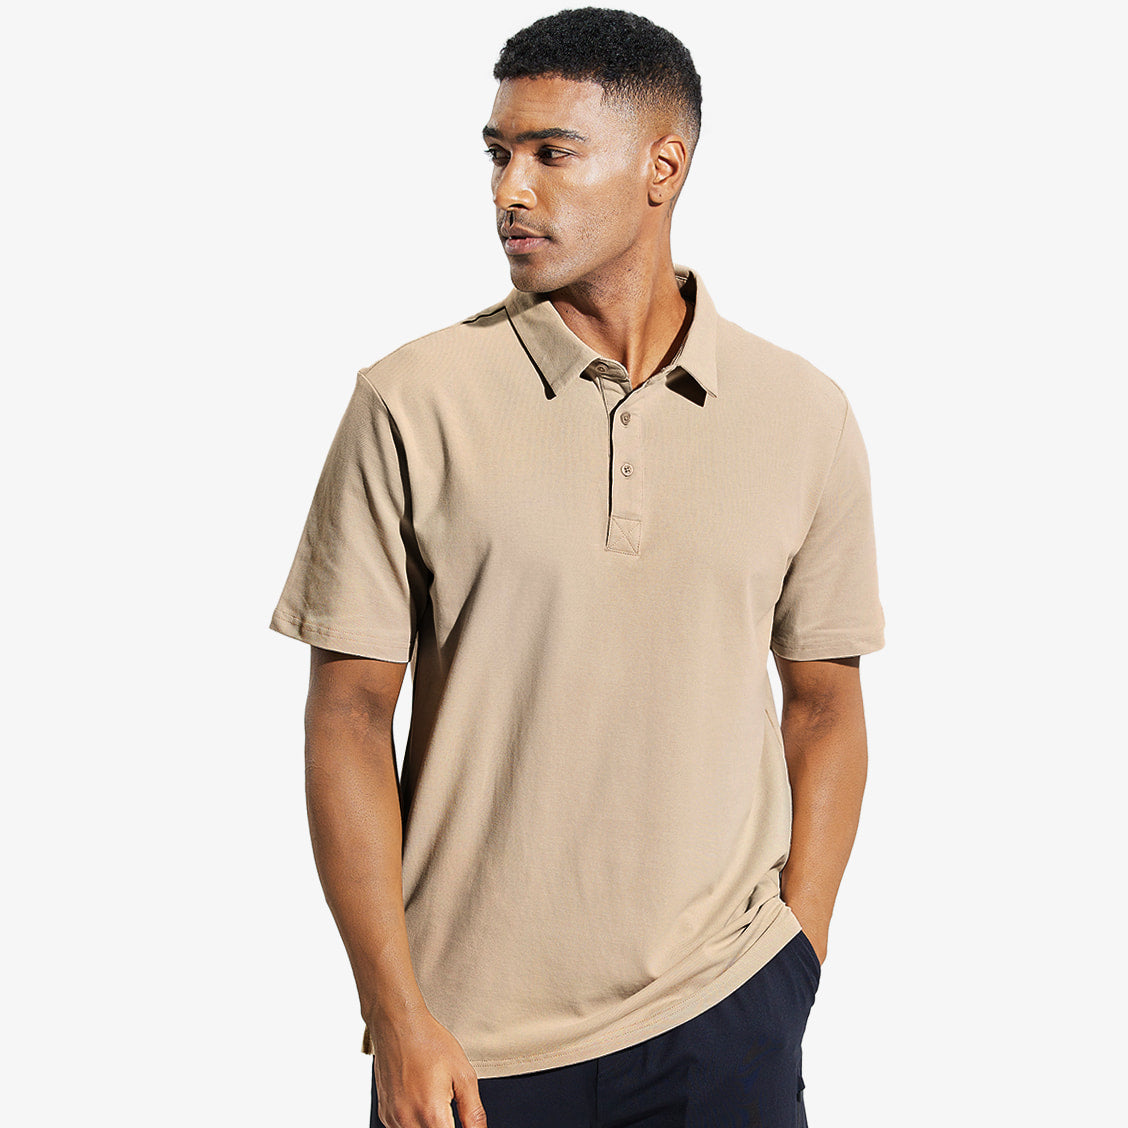 Men's Short Sleeve Cotton Polo Shirts Soft Golf Shirt - Khaki / XS